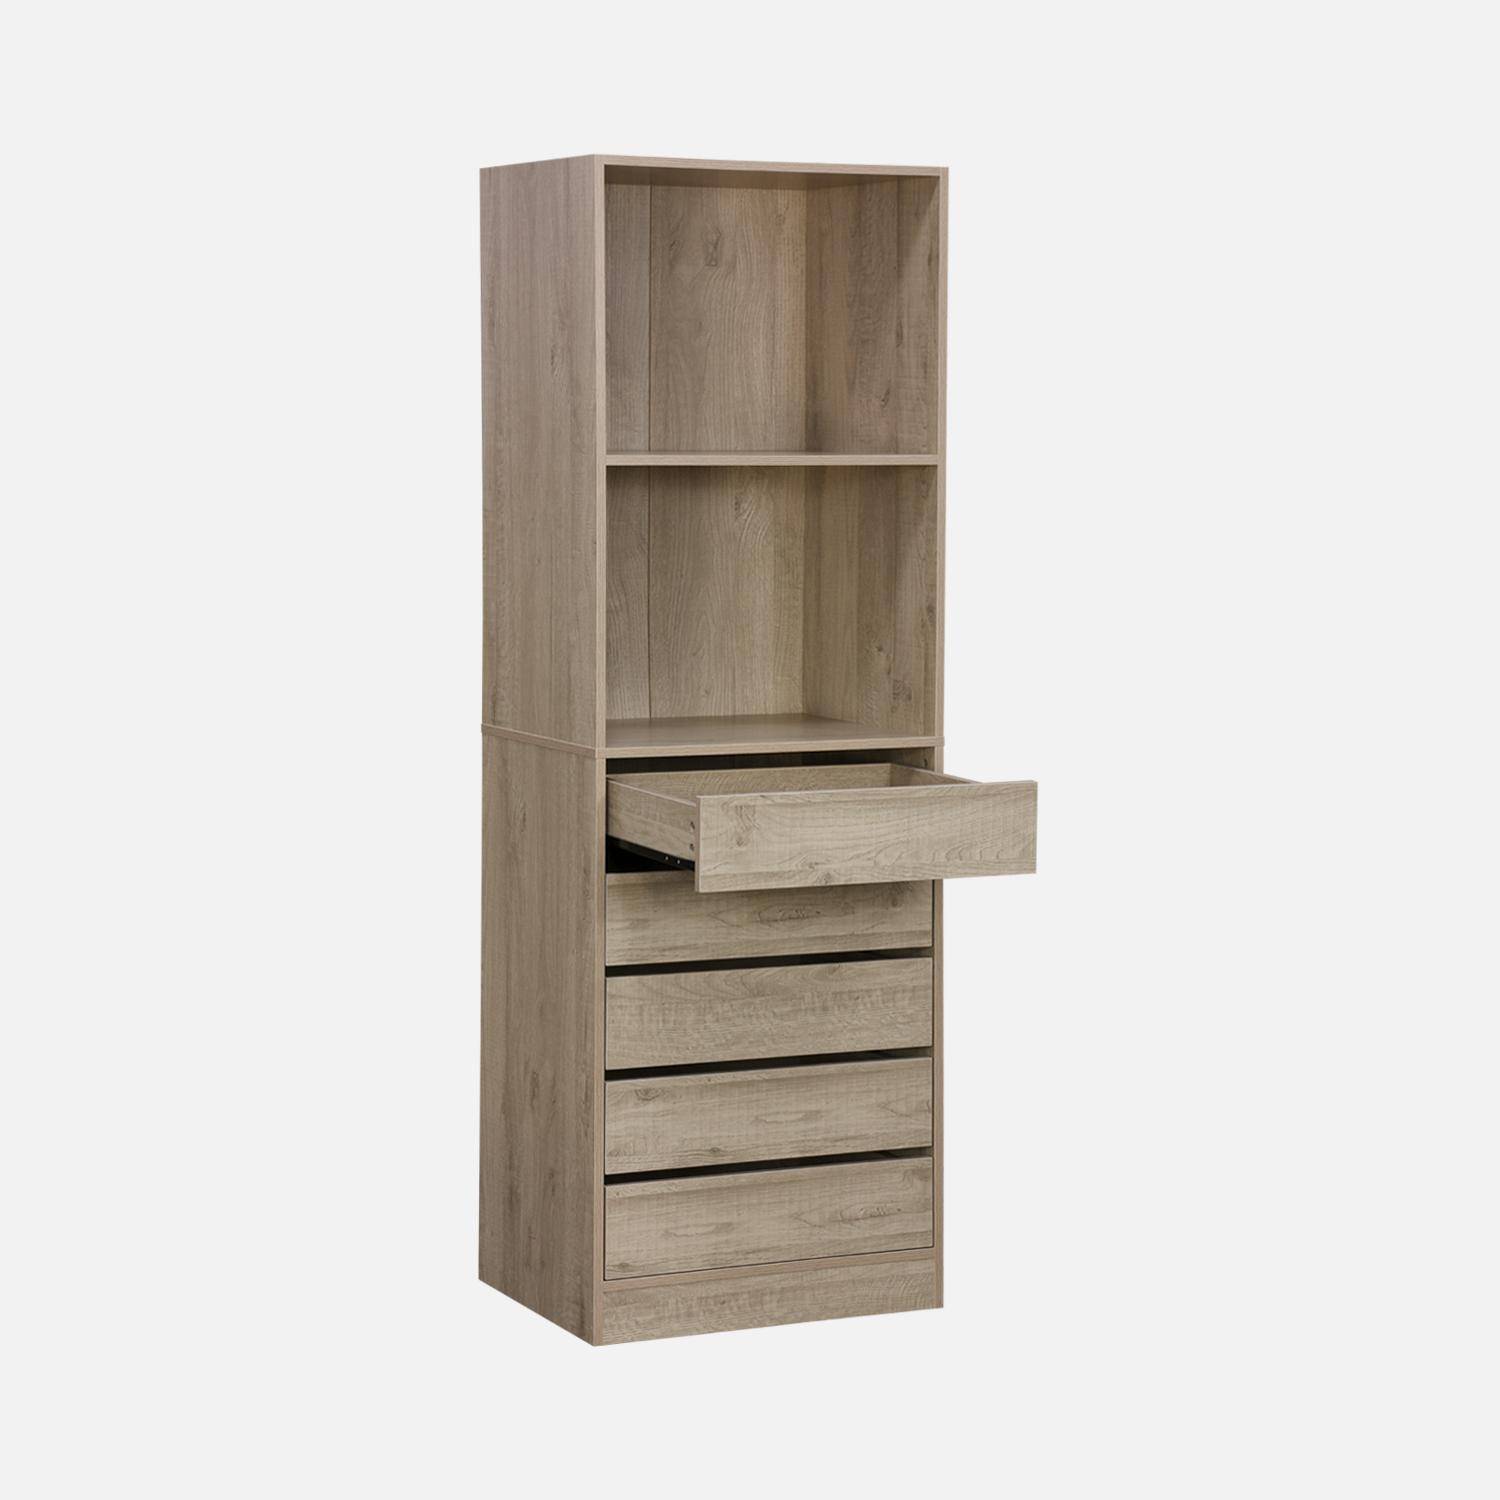 Modular open wardrobe drawer and shelf unit, 60x45x180cm, Modulo, 5 drawers, 2 shelves, Natural,sweeek,Photo7